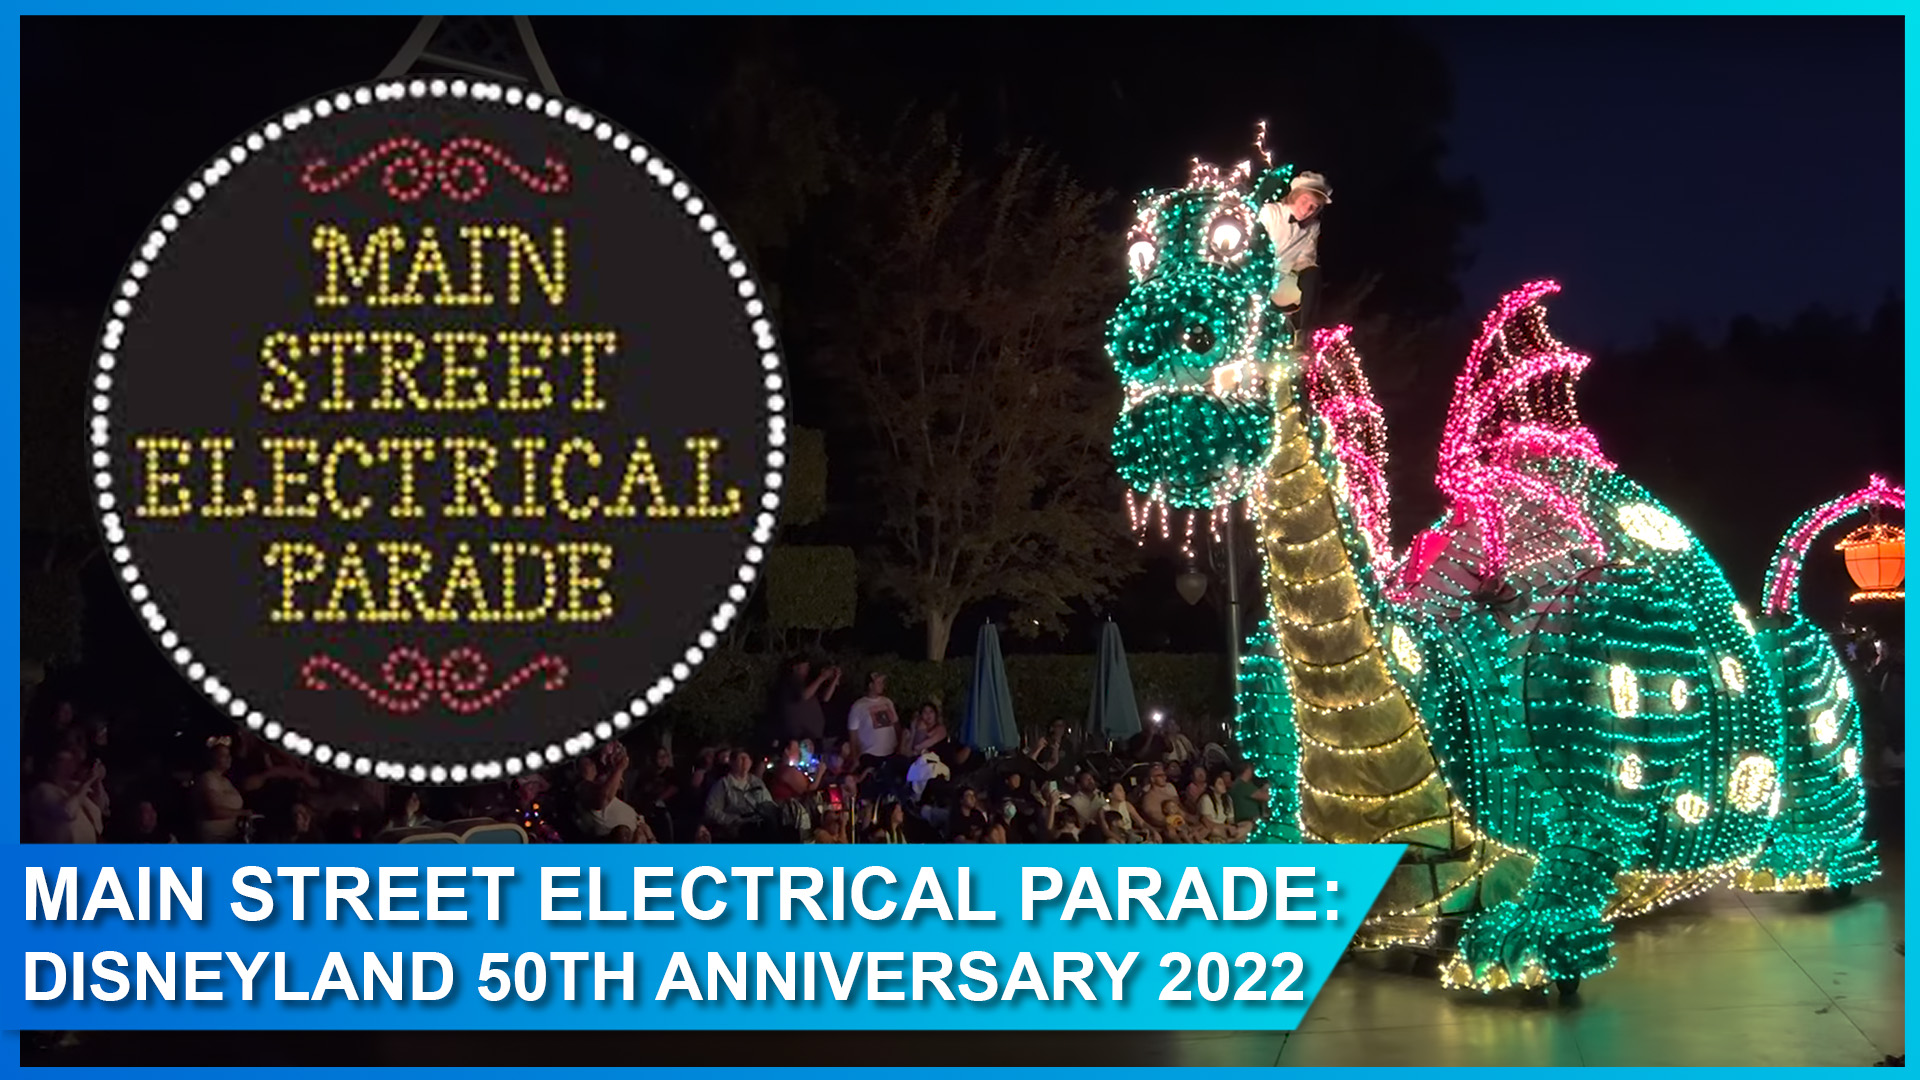 Disneylands Main Street Electrical Parade